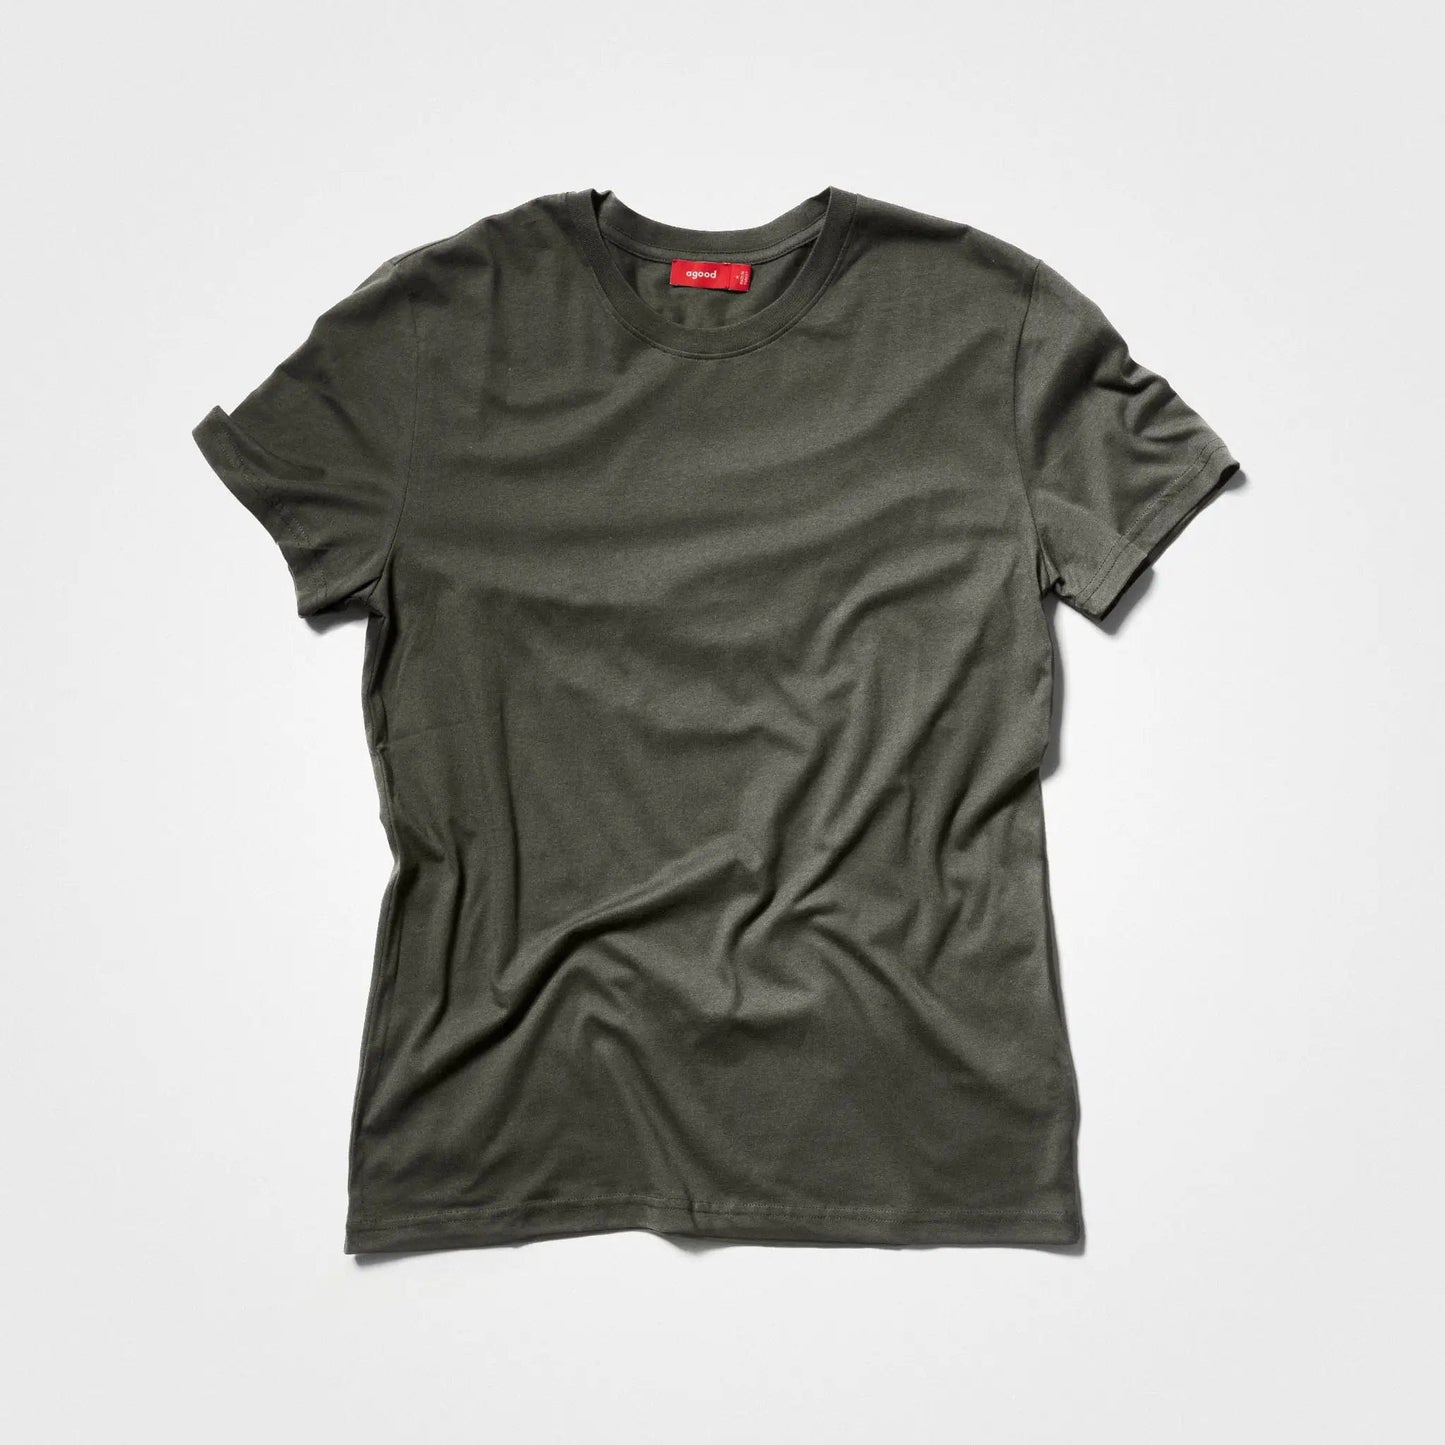 Men’s Recycled Cotton T-Shirt, Moss